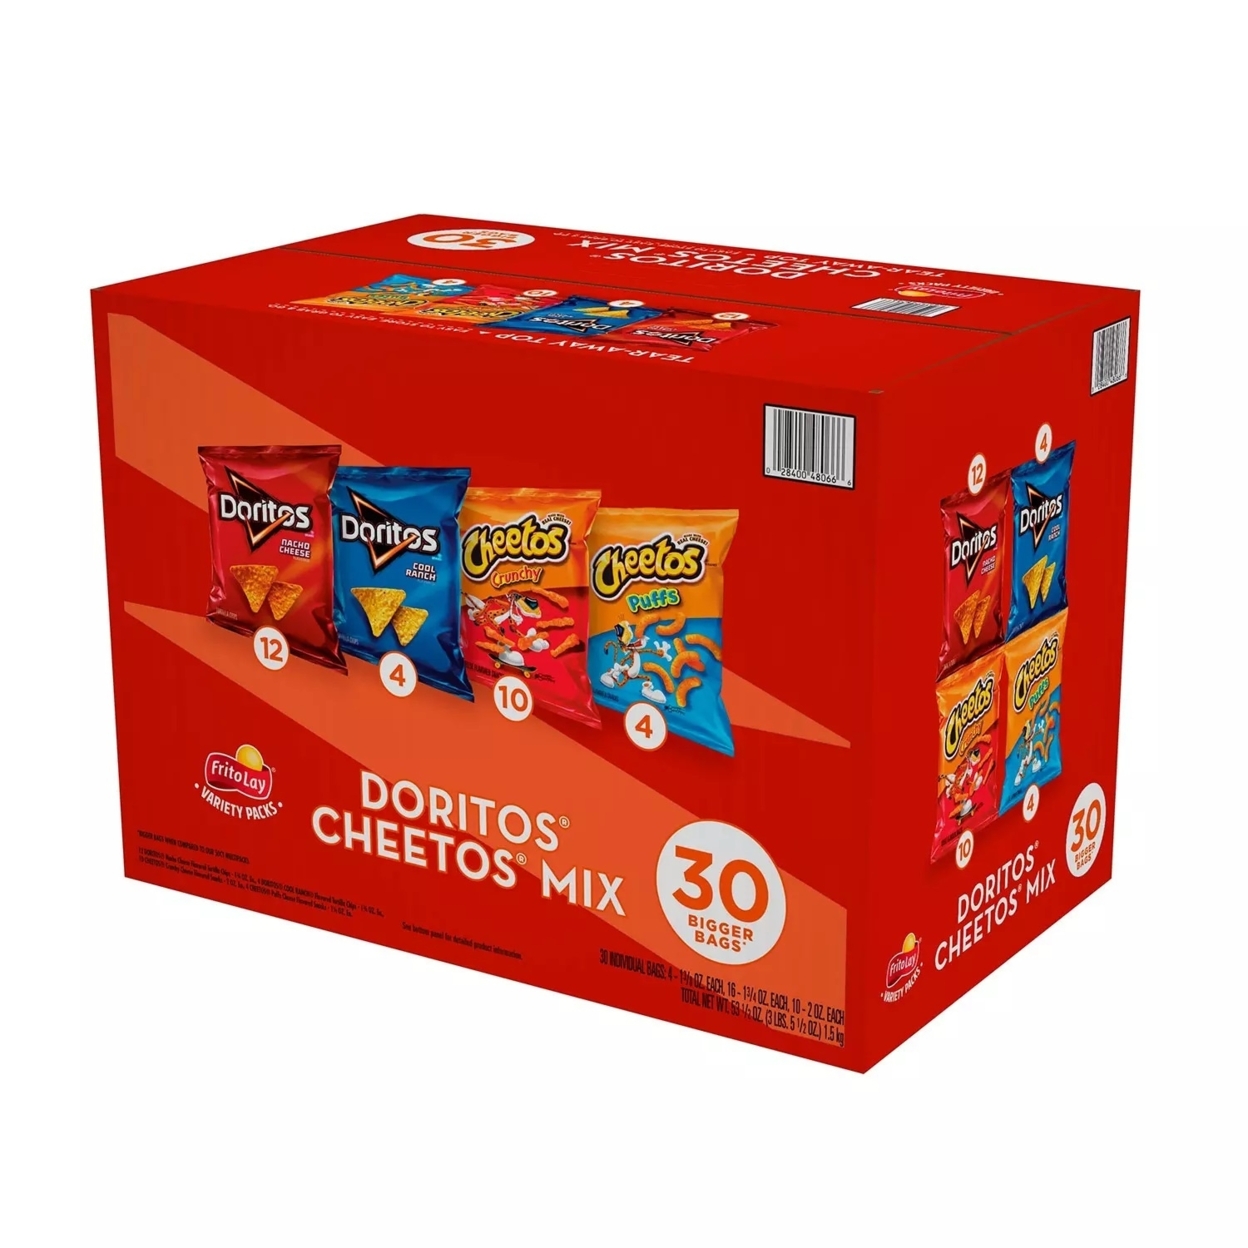 Doritos And Cheetos Mix Snacks Variety Pack, 30 Count